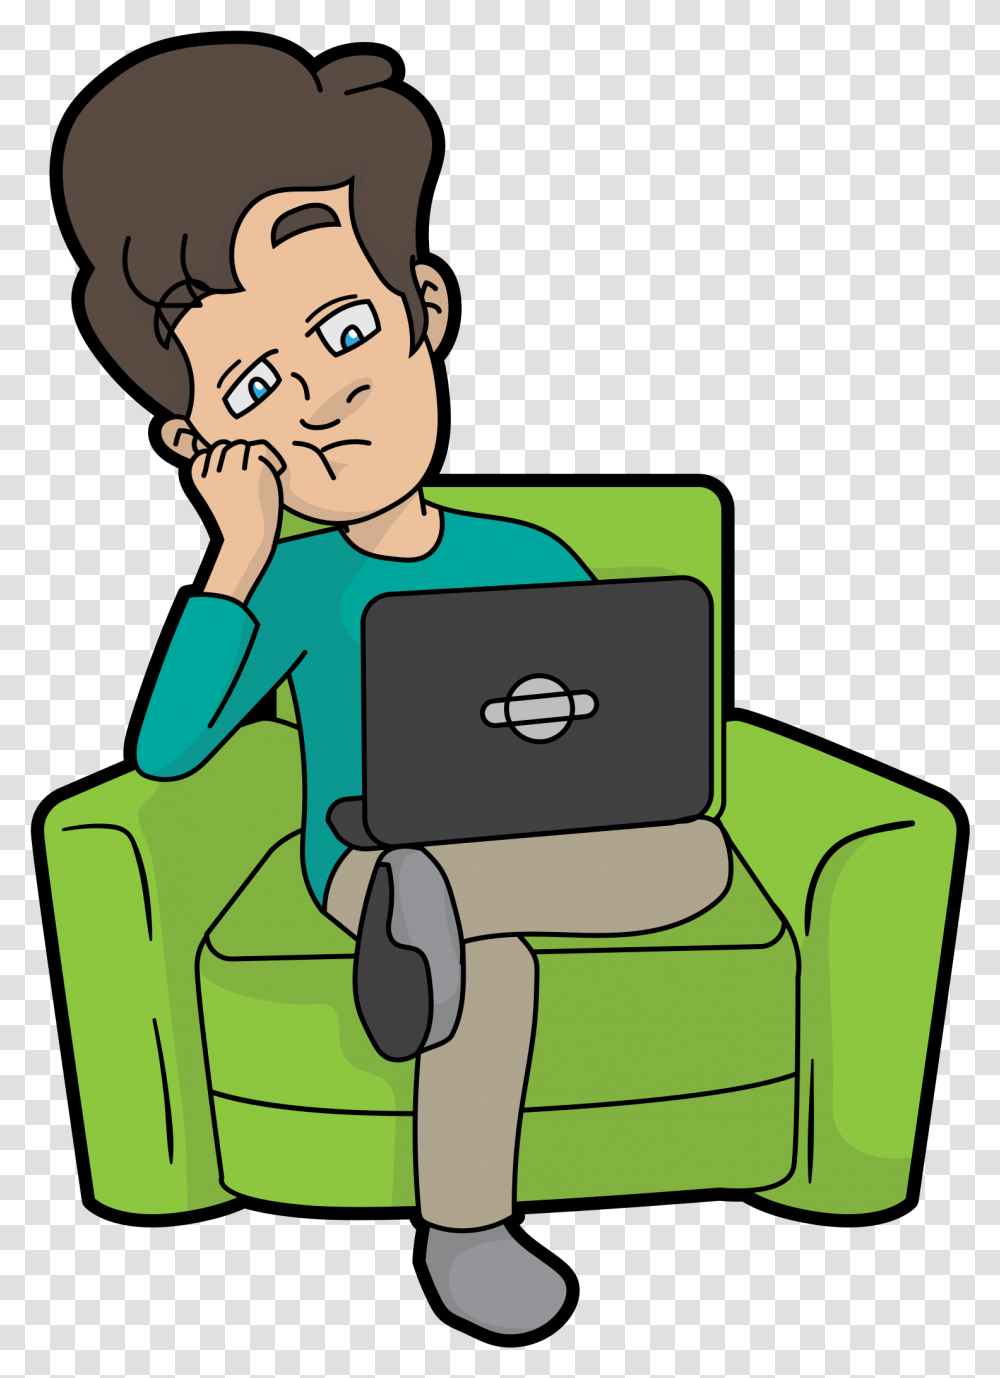 Clip Art Man At Computer Cartoon Cartoon On Computer, Chair, Furniture, Armchair, Couch Transparent Png